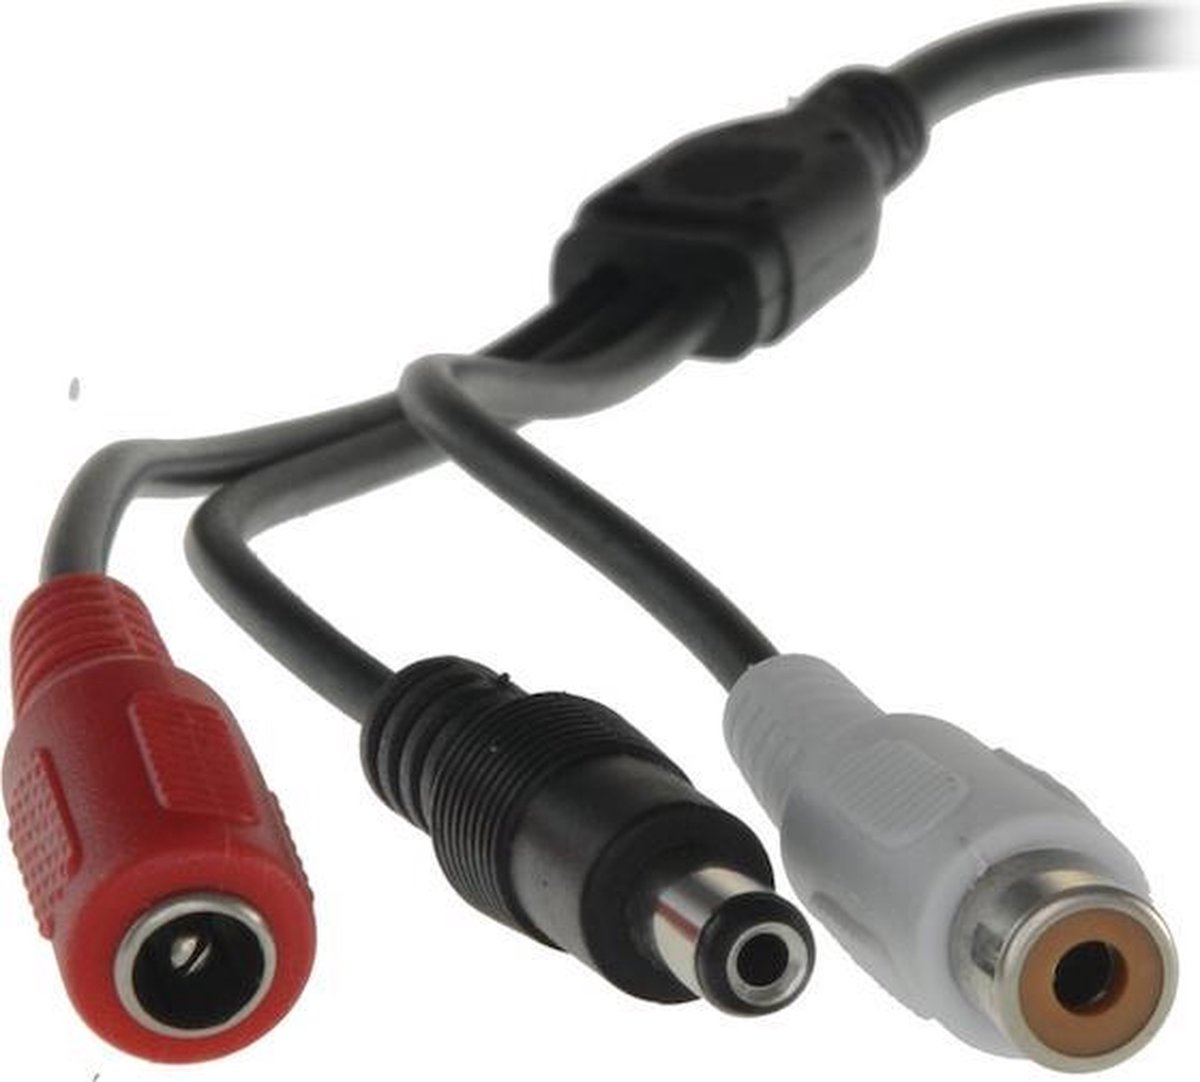 WL4 MIC-P mini microfoon met audio en voeding doorgifte connectors